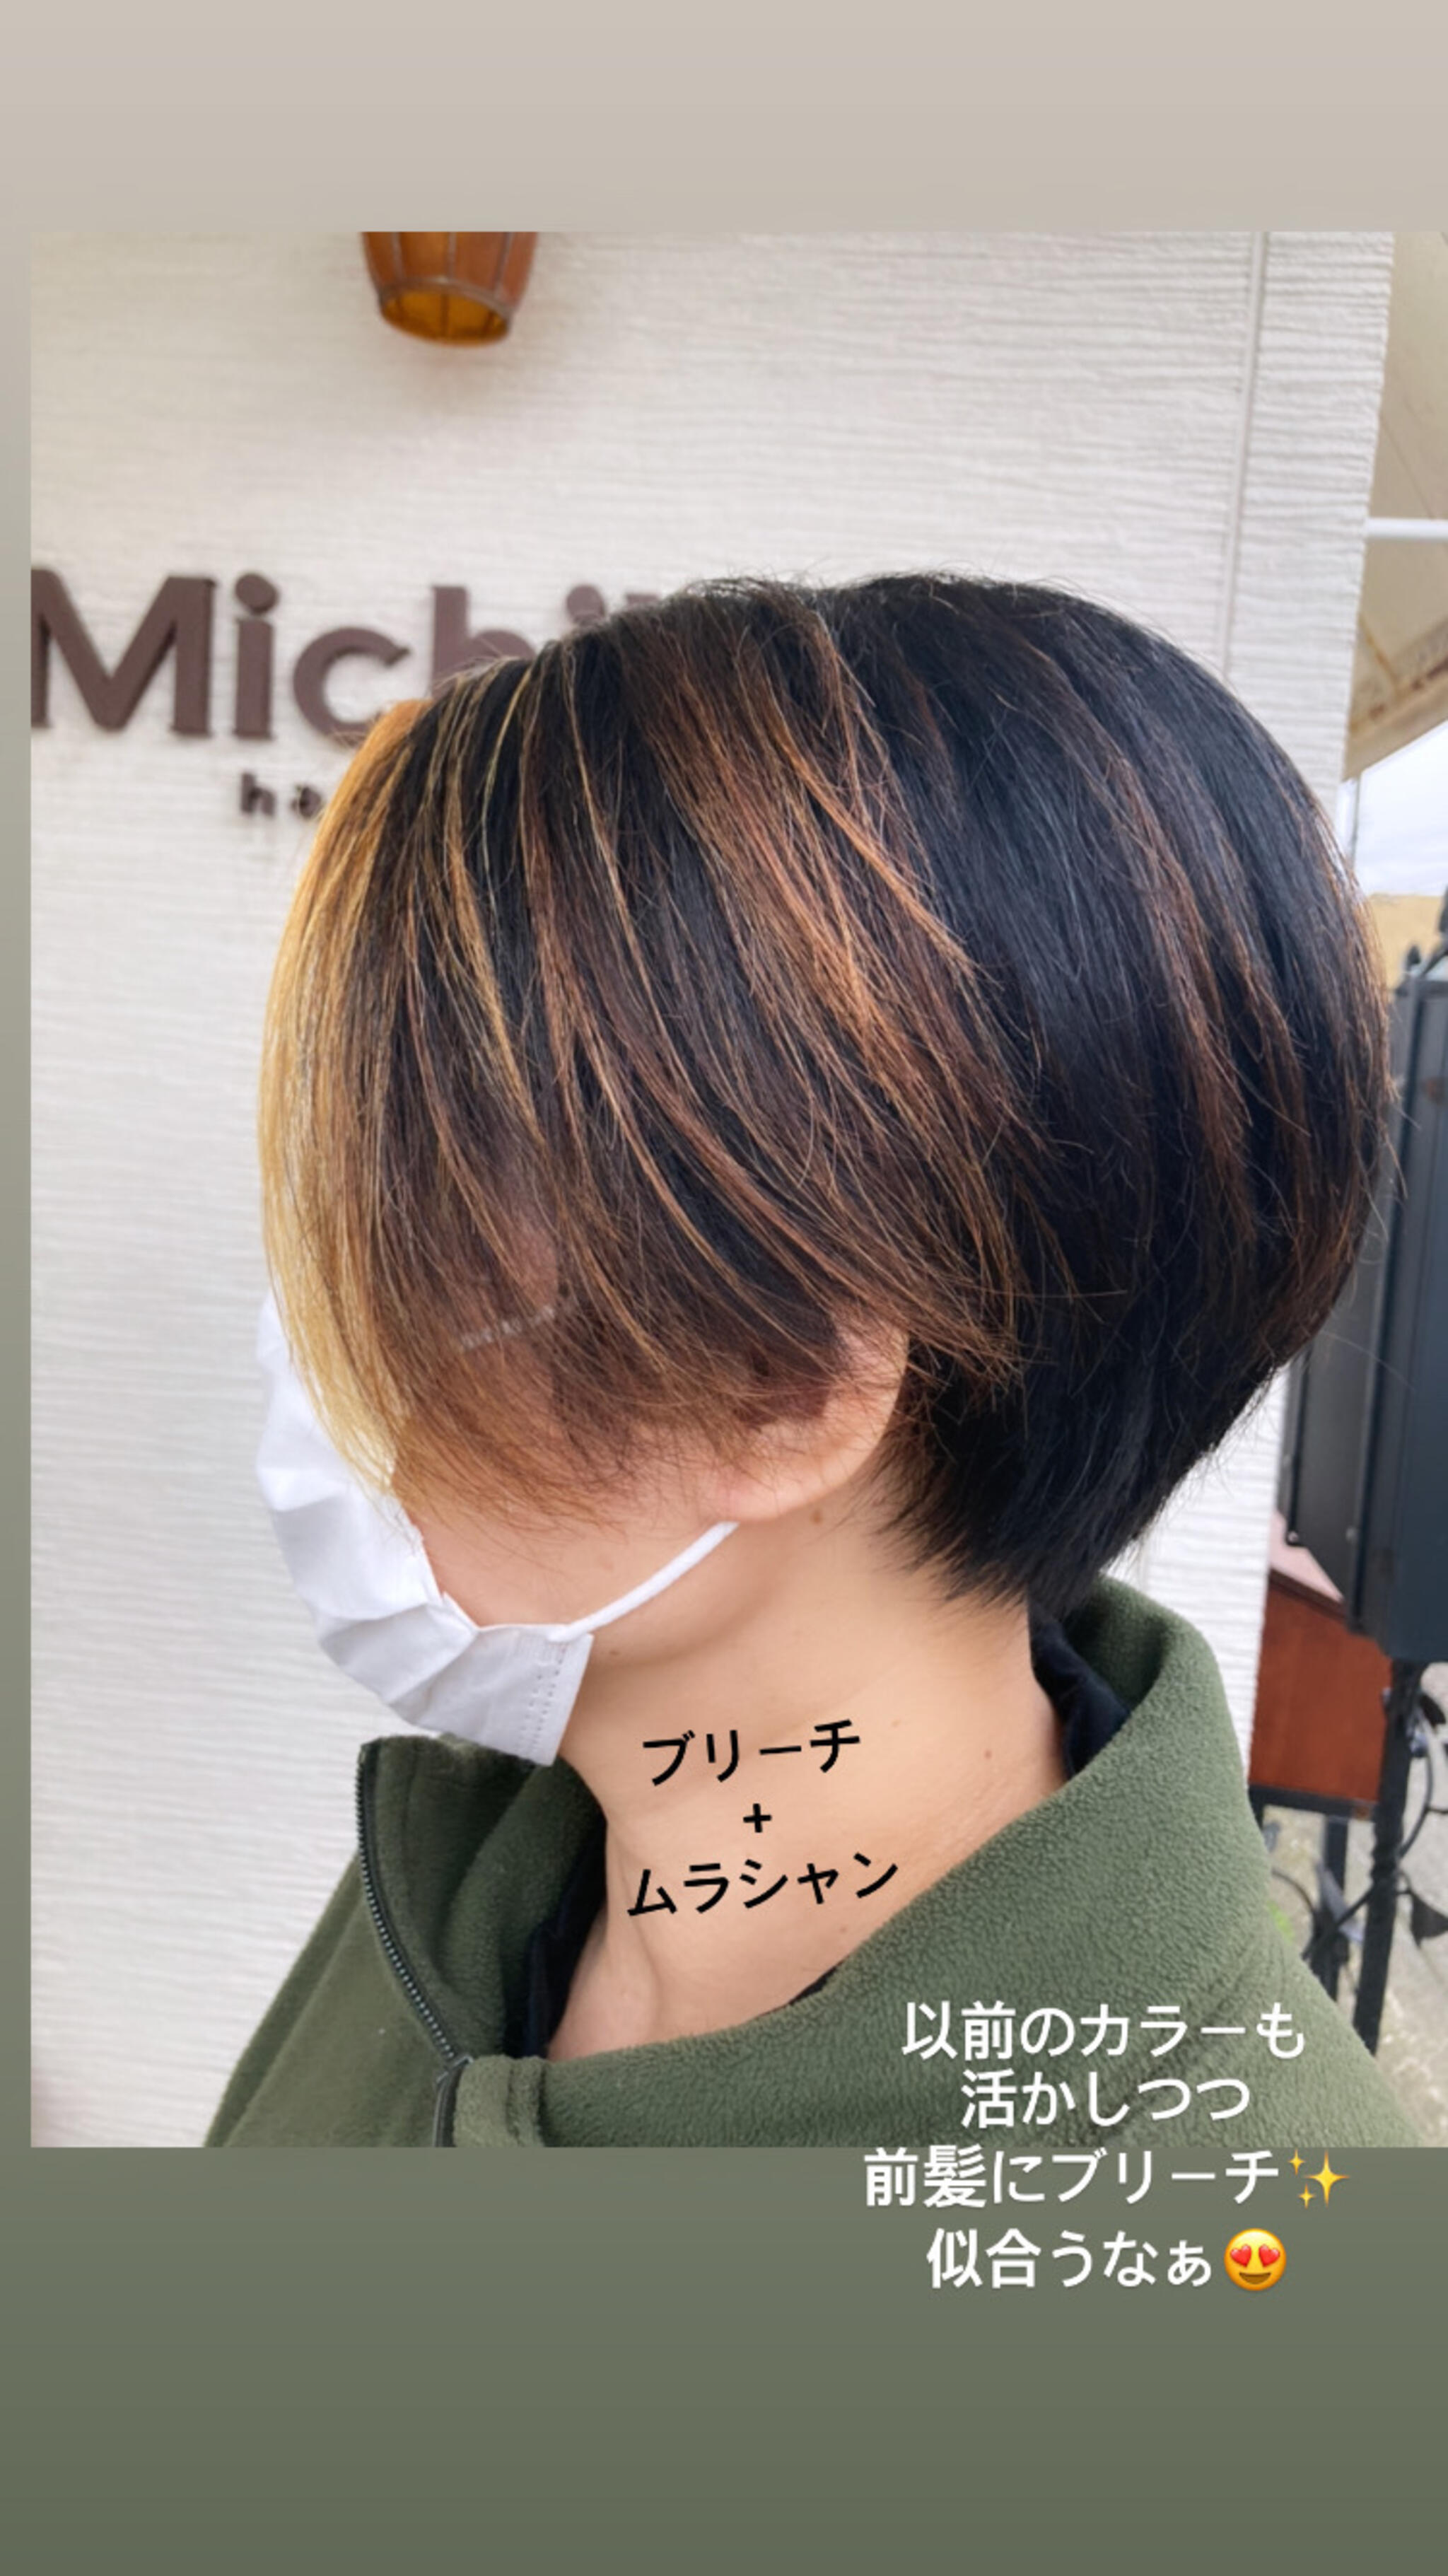 Michiko hair and spaの代表写真7